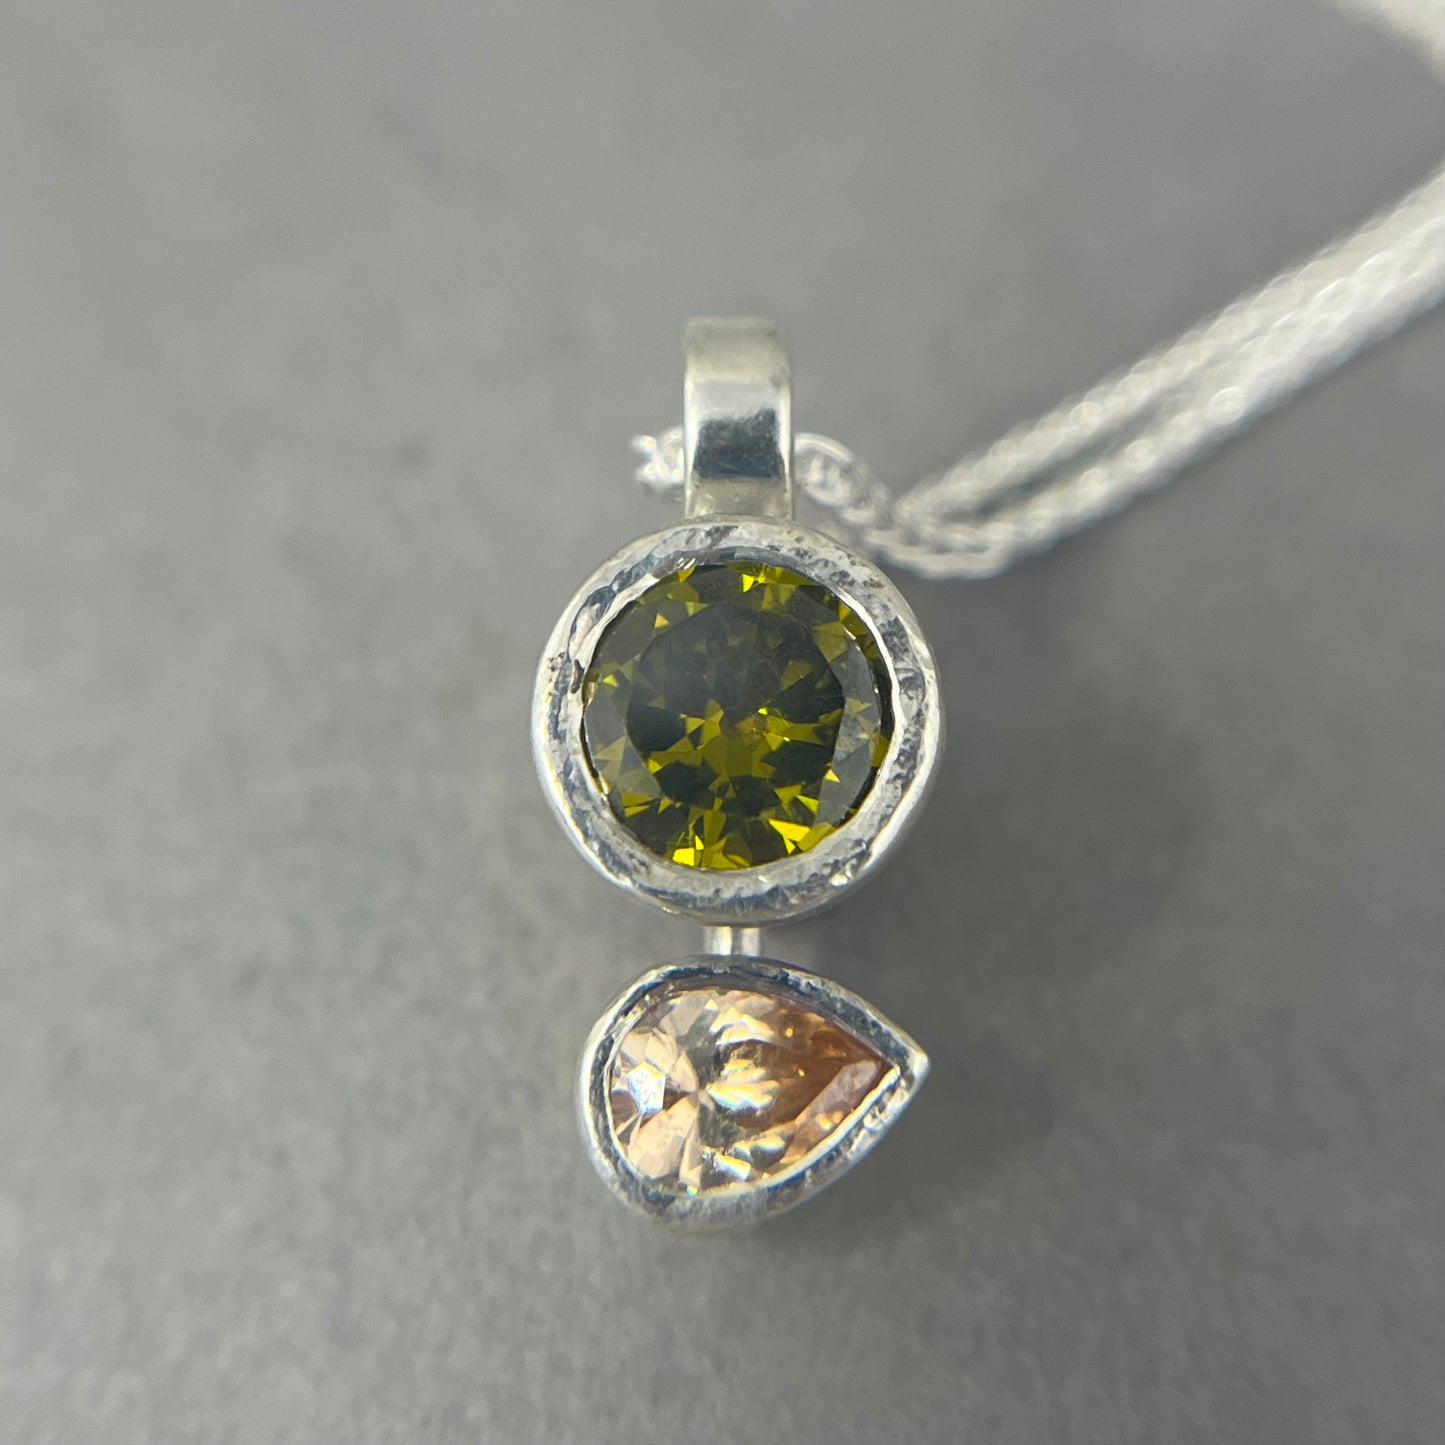 Totem Gemstone Necklace / Silver